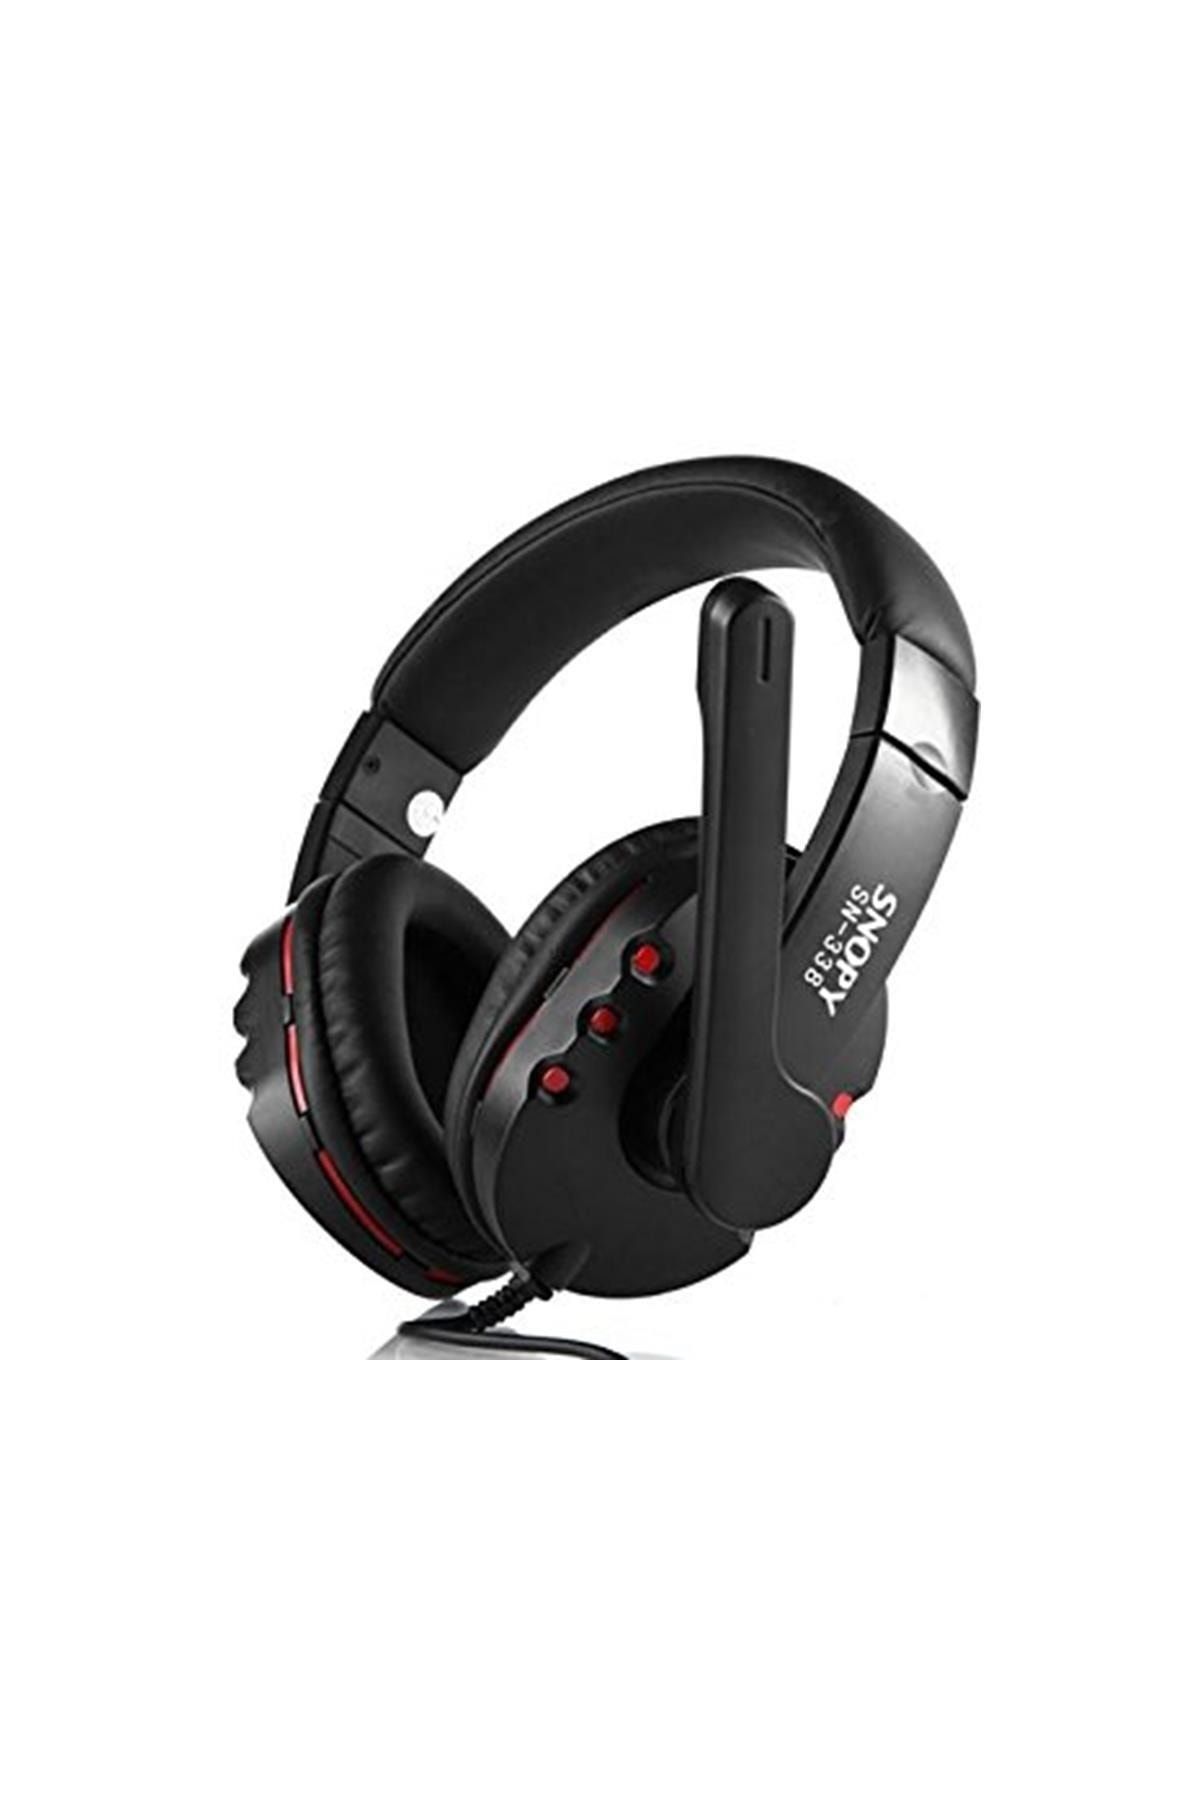 Snopy Siyah/kırmızı Mikrofonlu Kulaküstü Gaming Kulaklık Sn-338